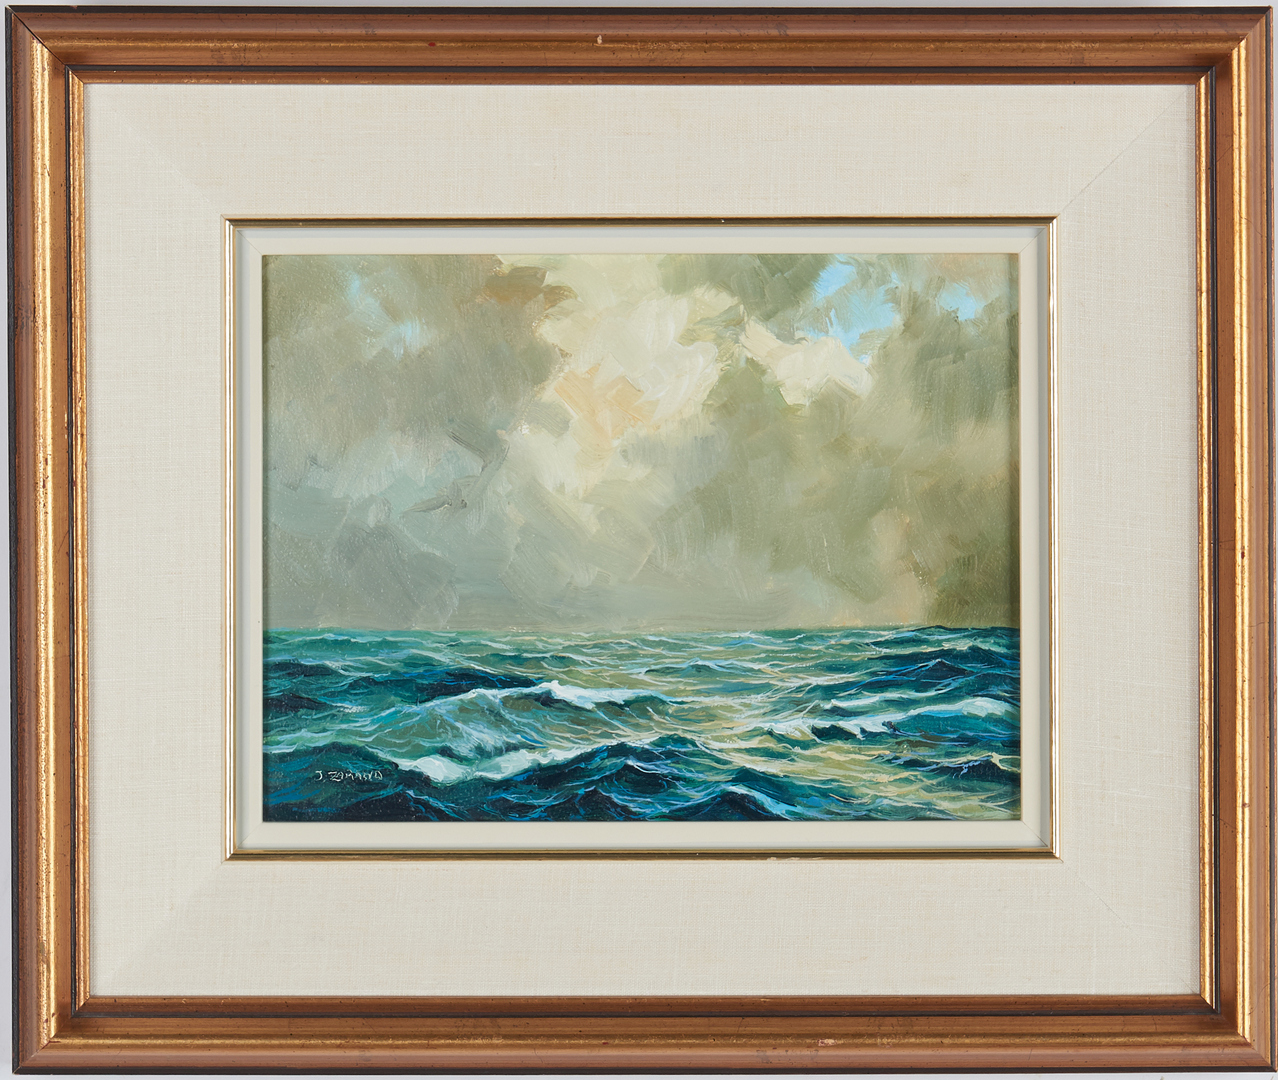 Lot 911: 2 20th Cent. Maritime Paintings, incl. H.H. Ahl, J. Zarand